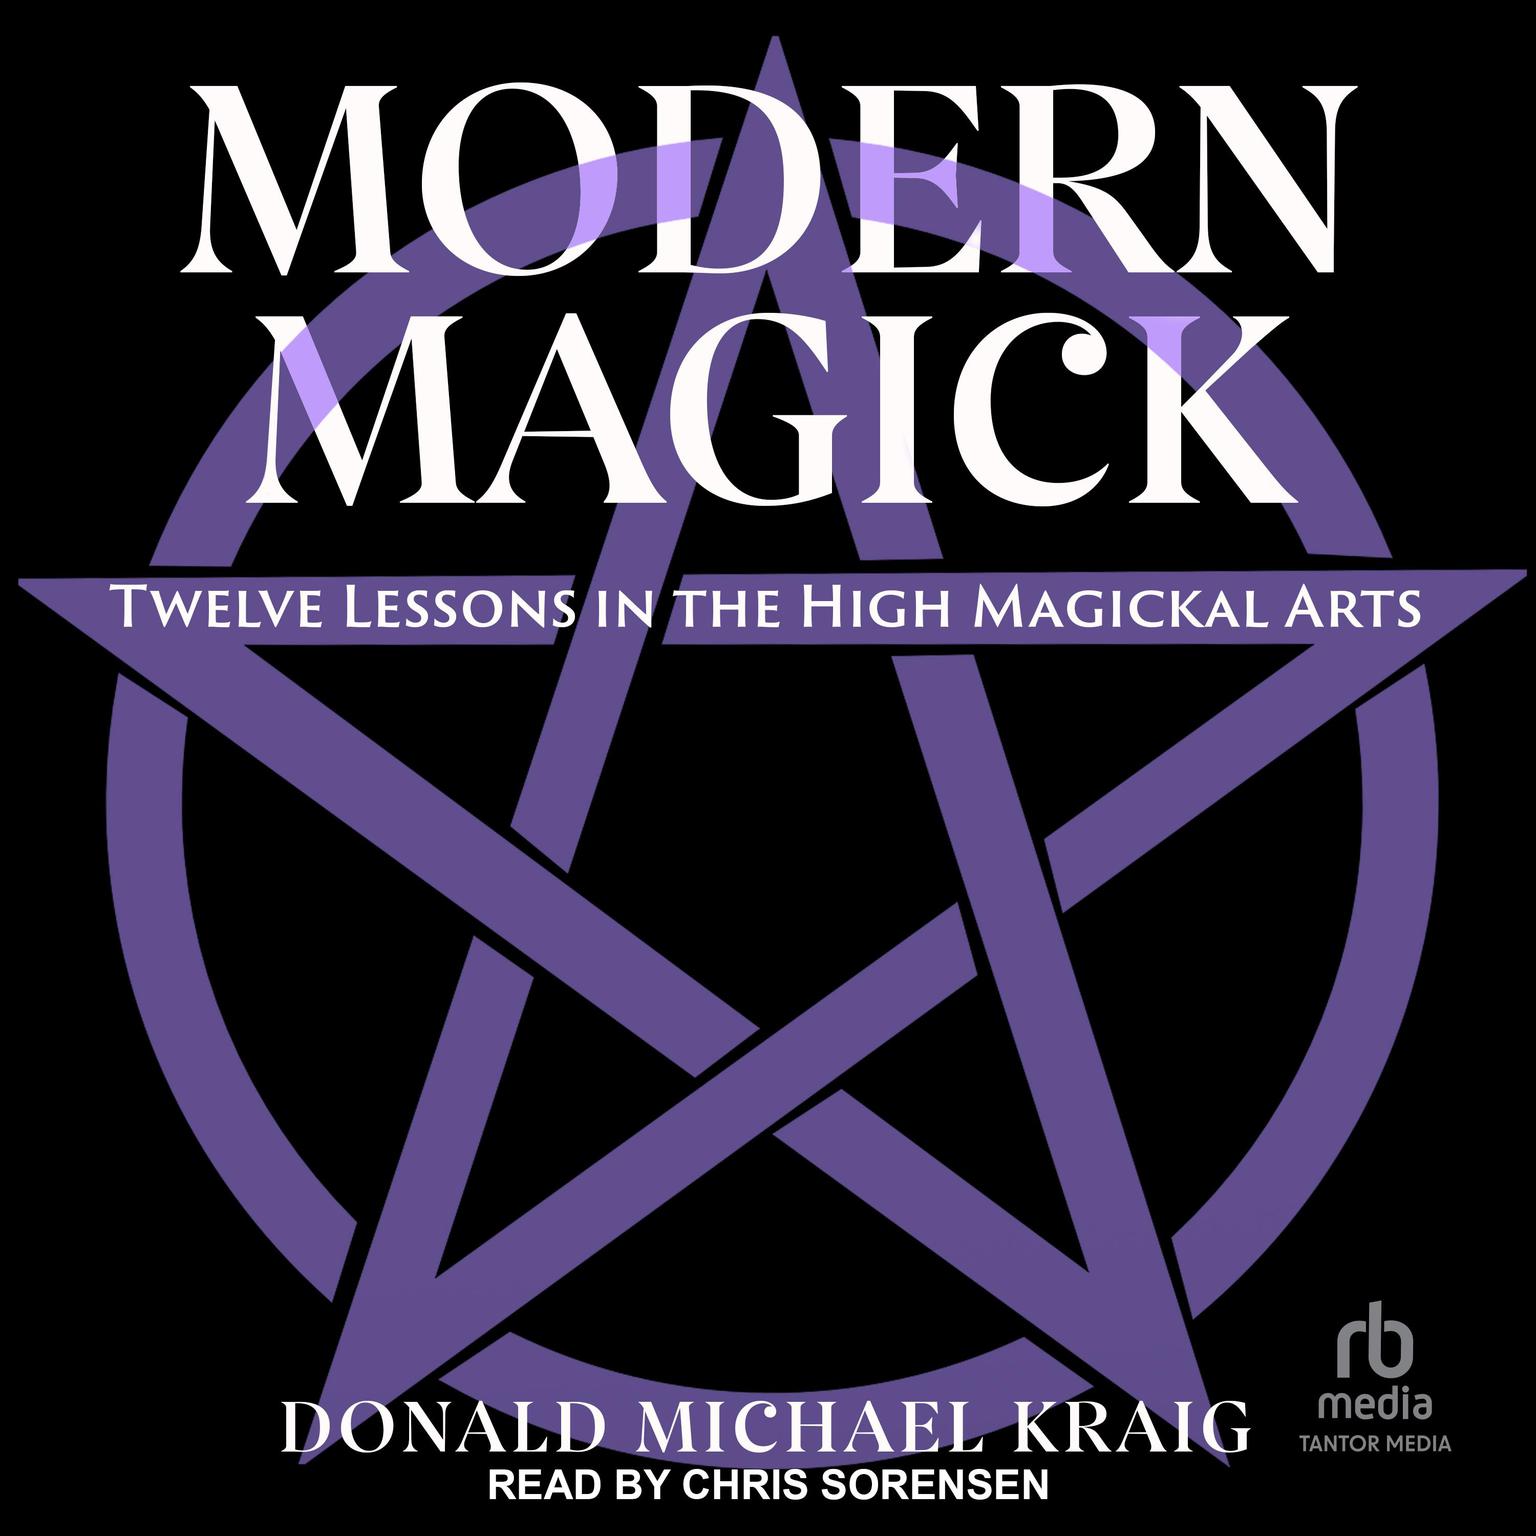 Modern Magick: Twelve Lessons in the High Magickal Arts Audiobook, by Donald Michael Kraig